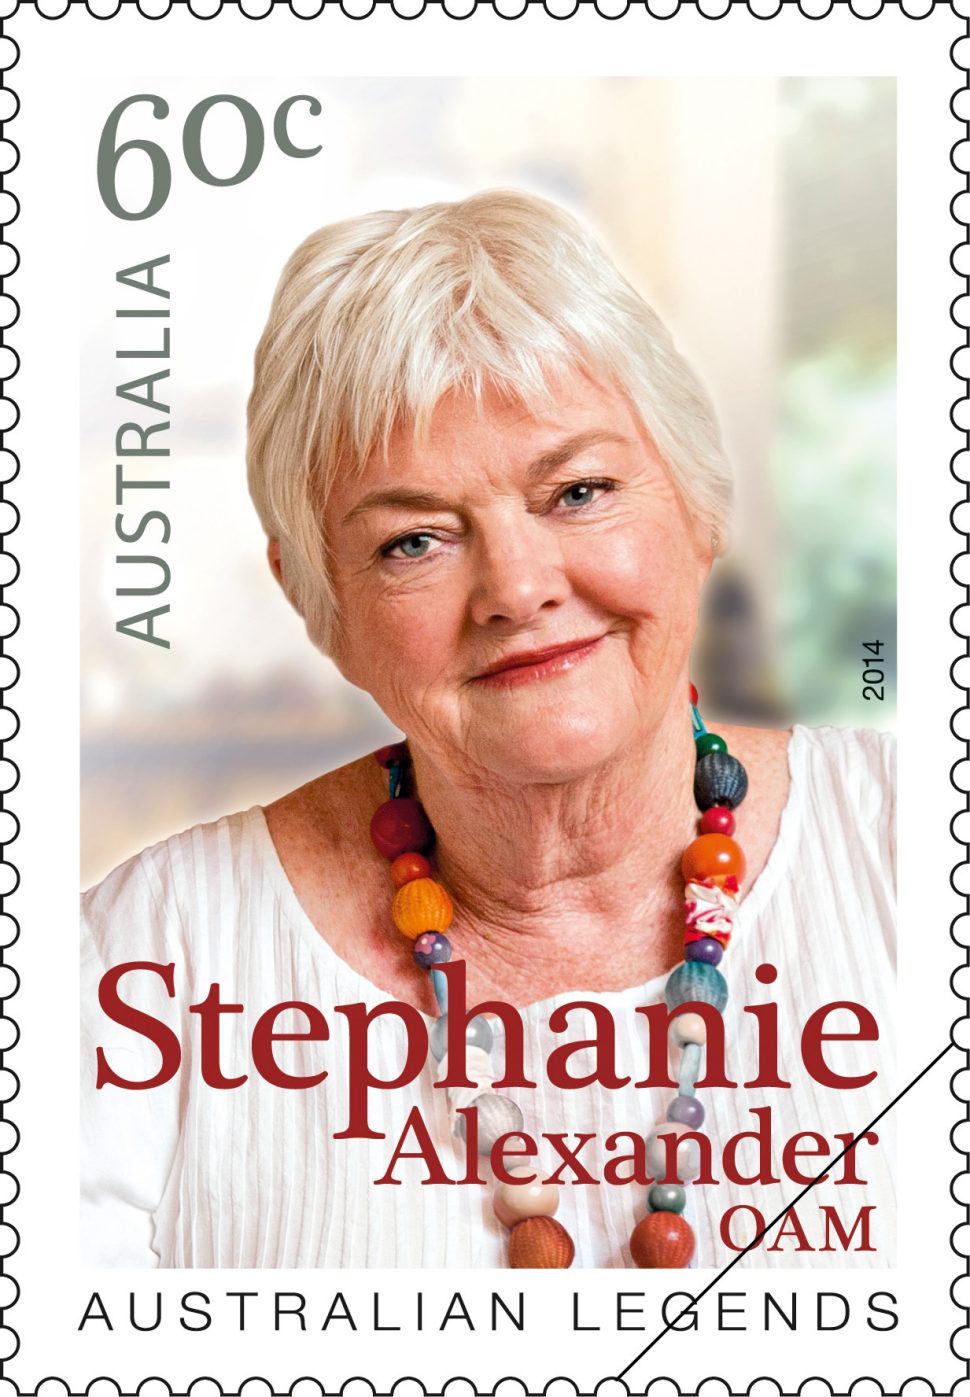 60 cent Stephanie Alexander stamp